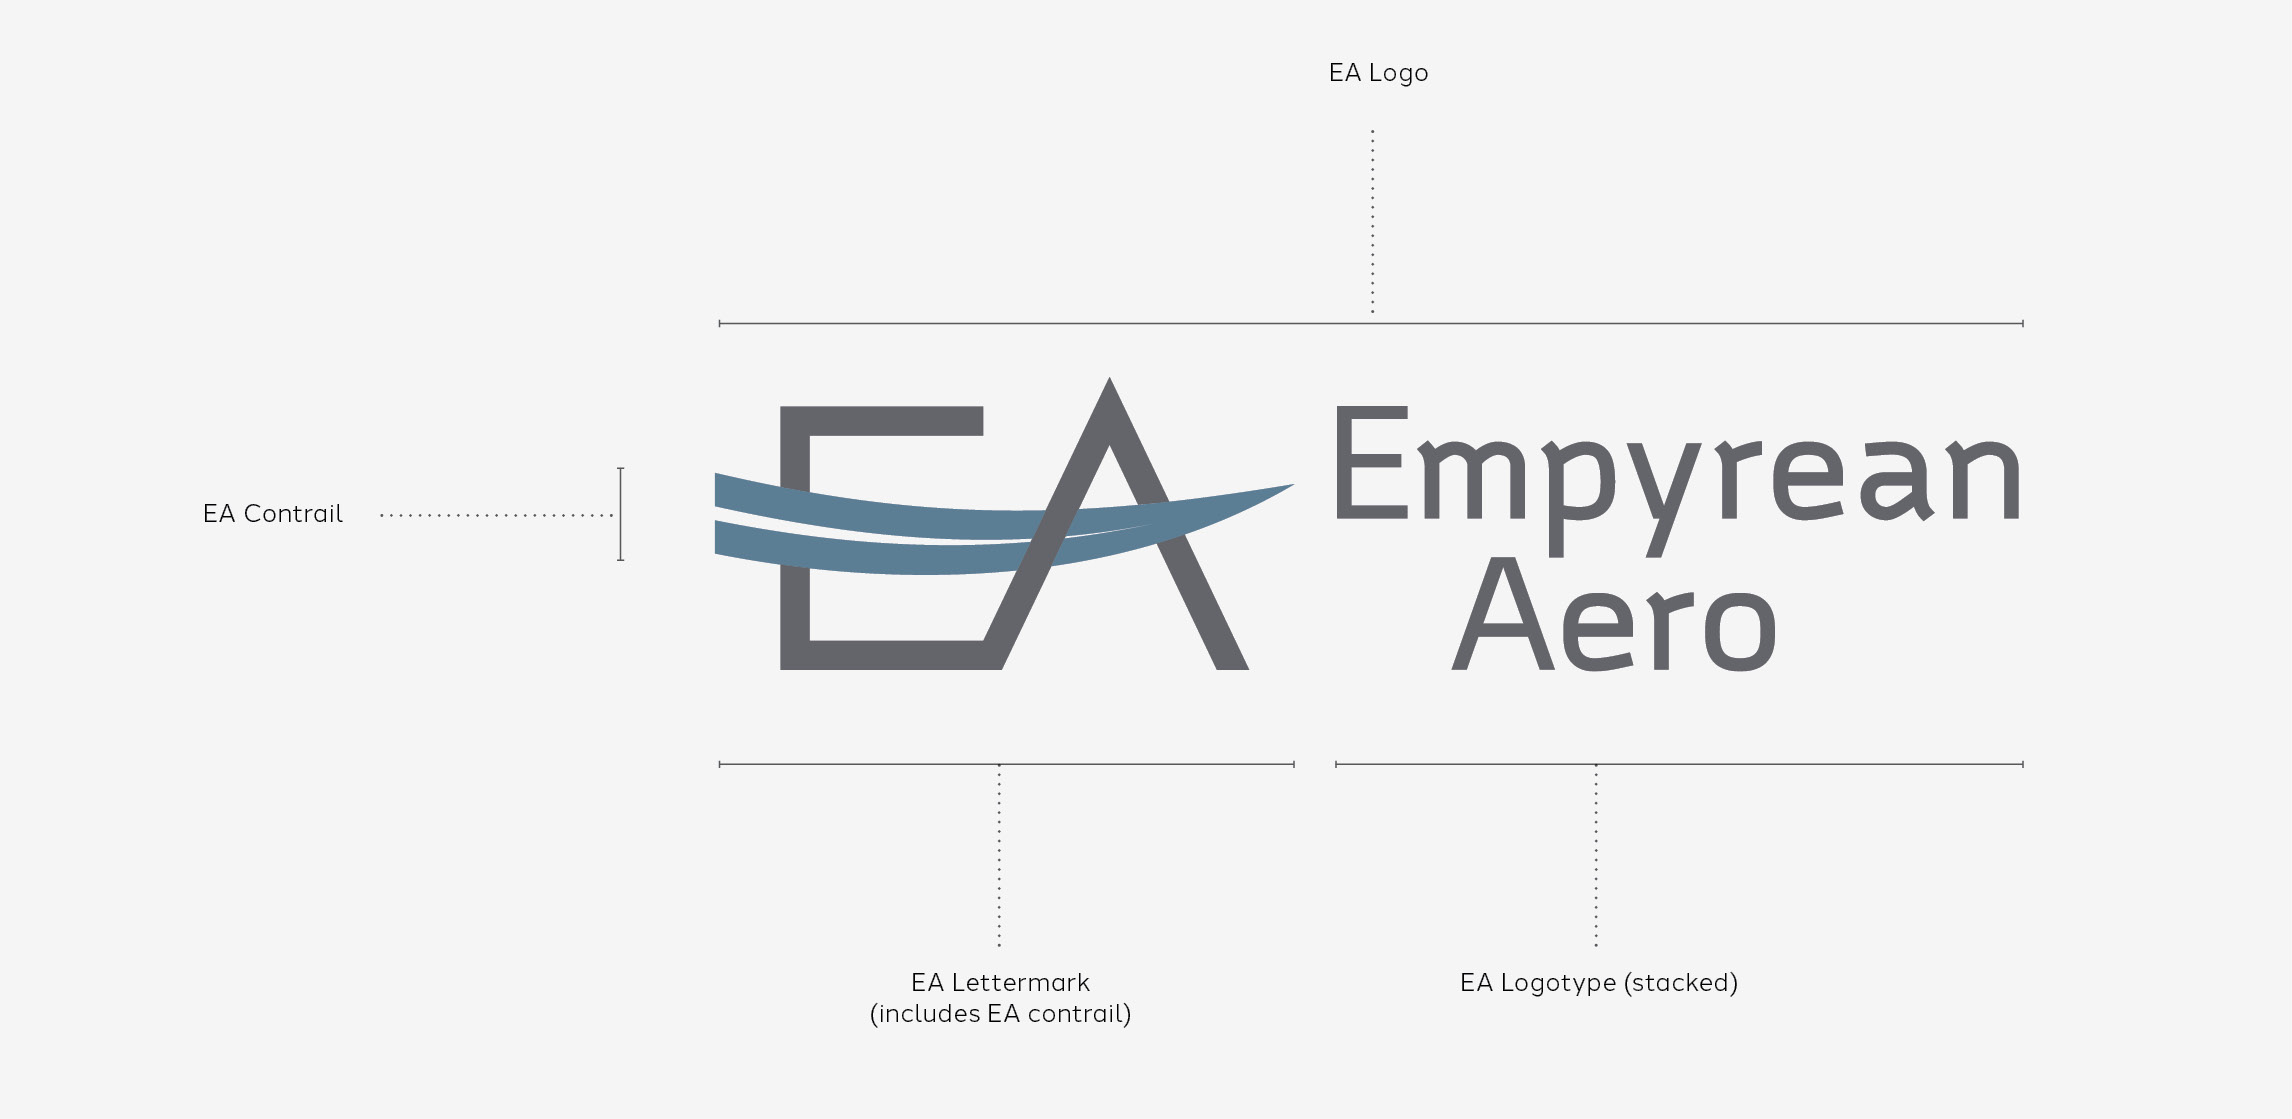 Empyrean Aero logo anatomy showing the EA contrail, lettermark, and logotype